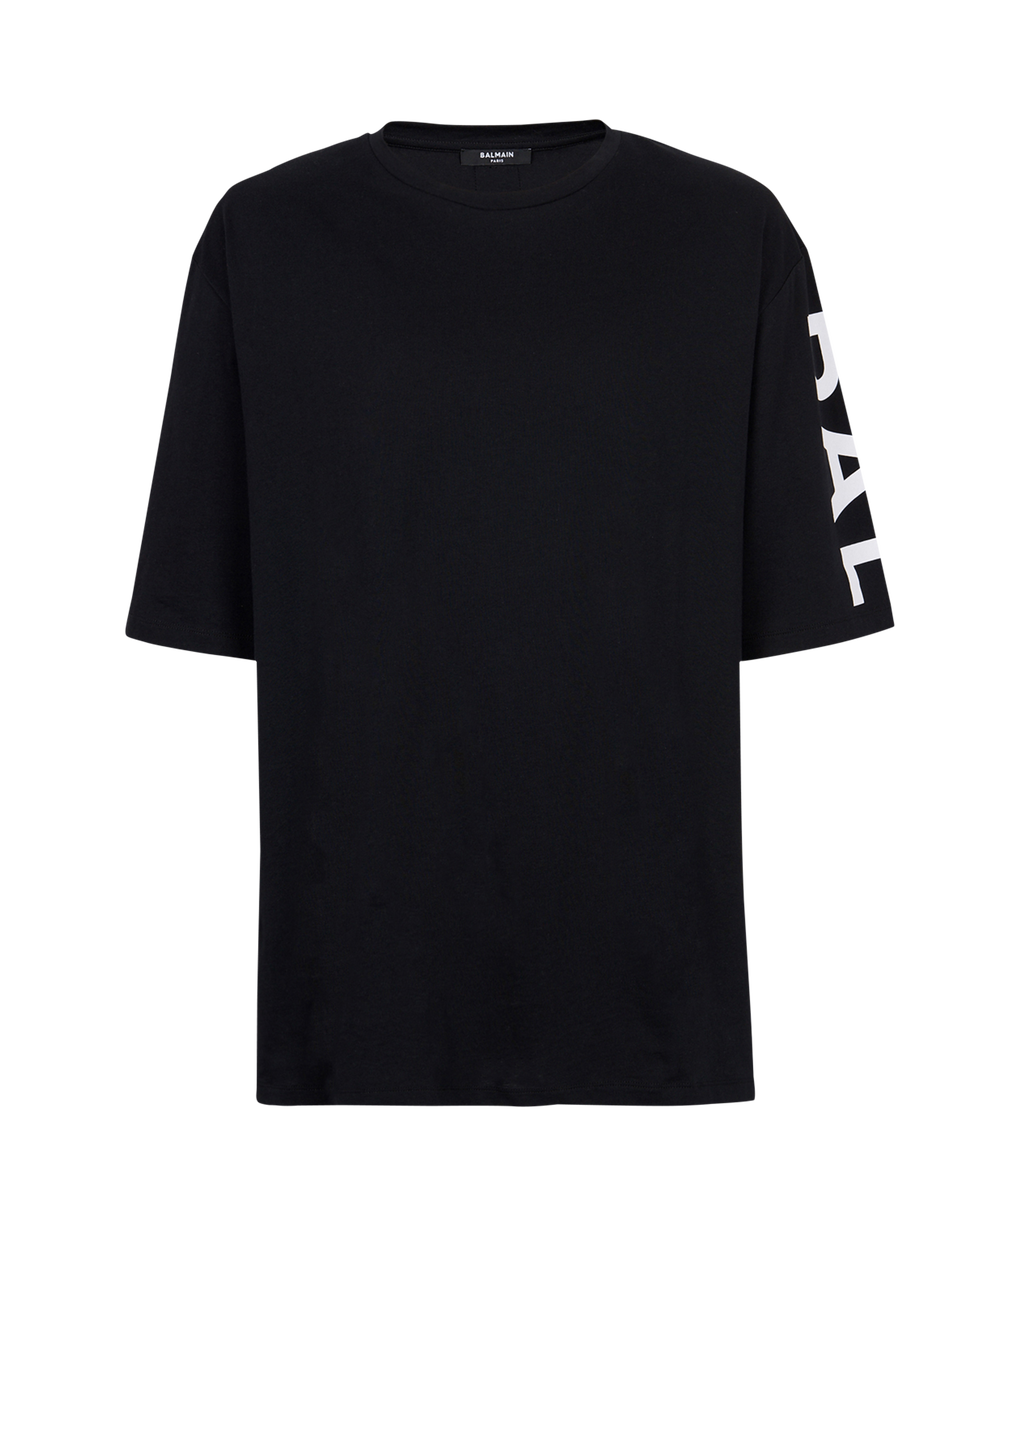 T-shirt oversize en coton imprimé logo Balmain, noir, hi-res